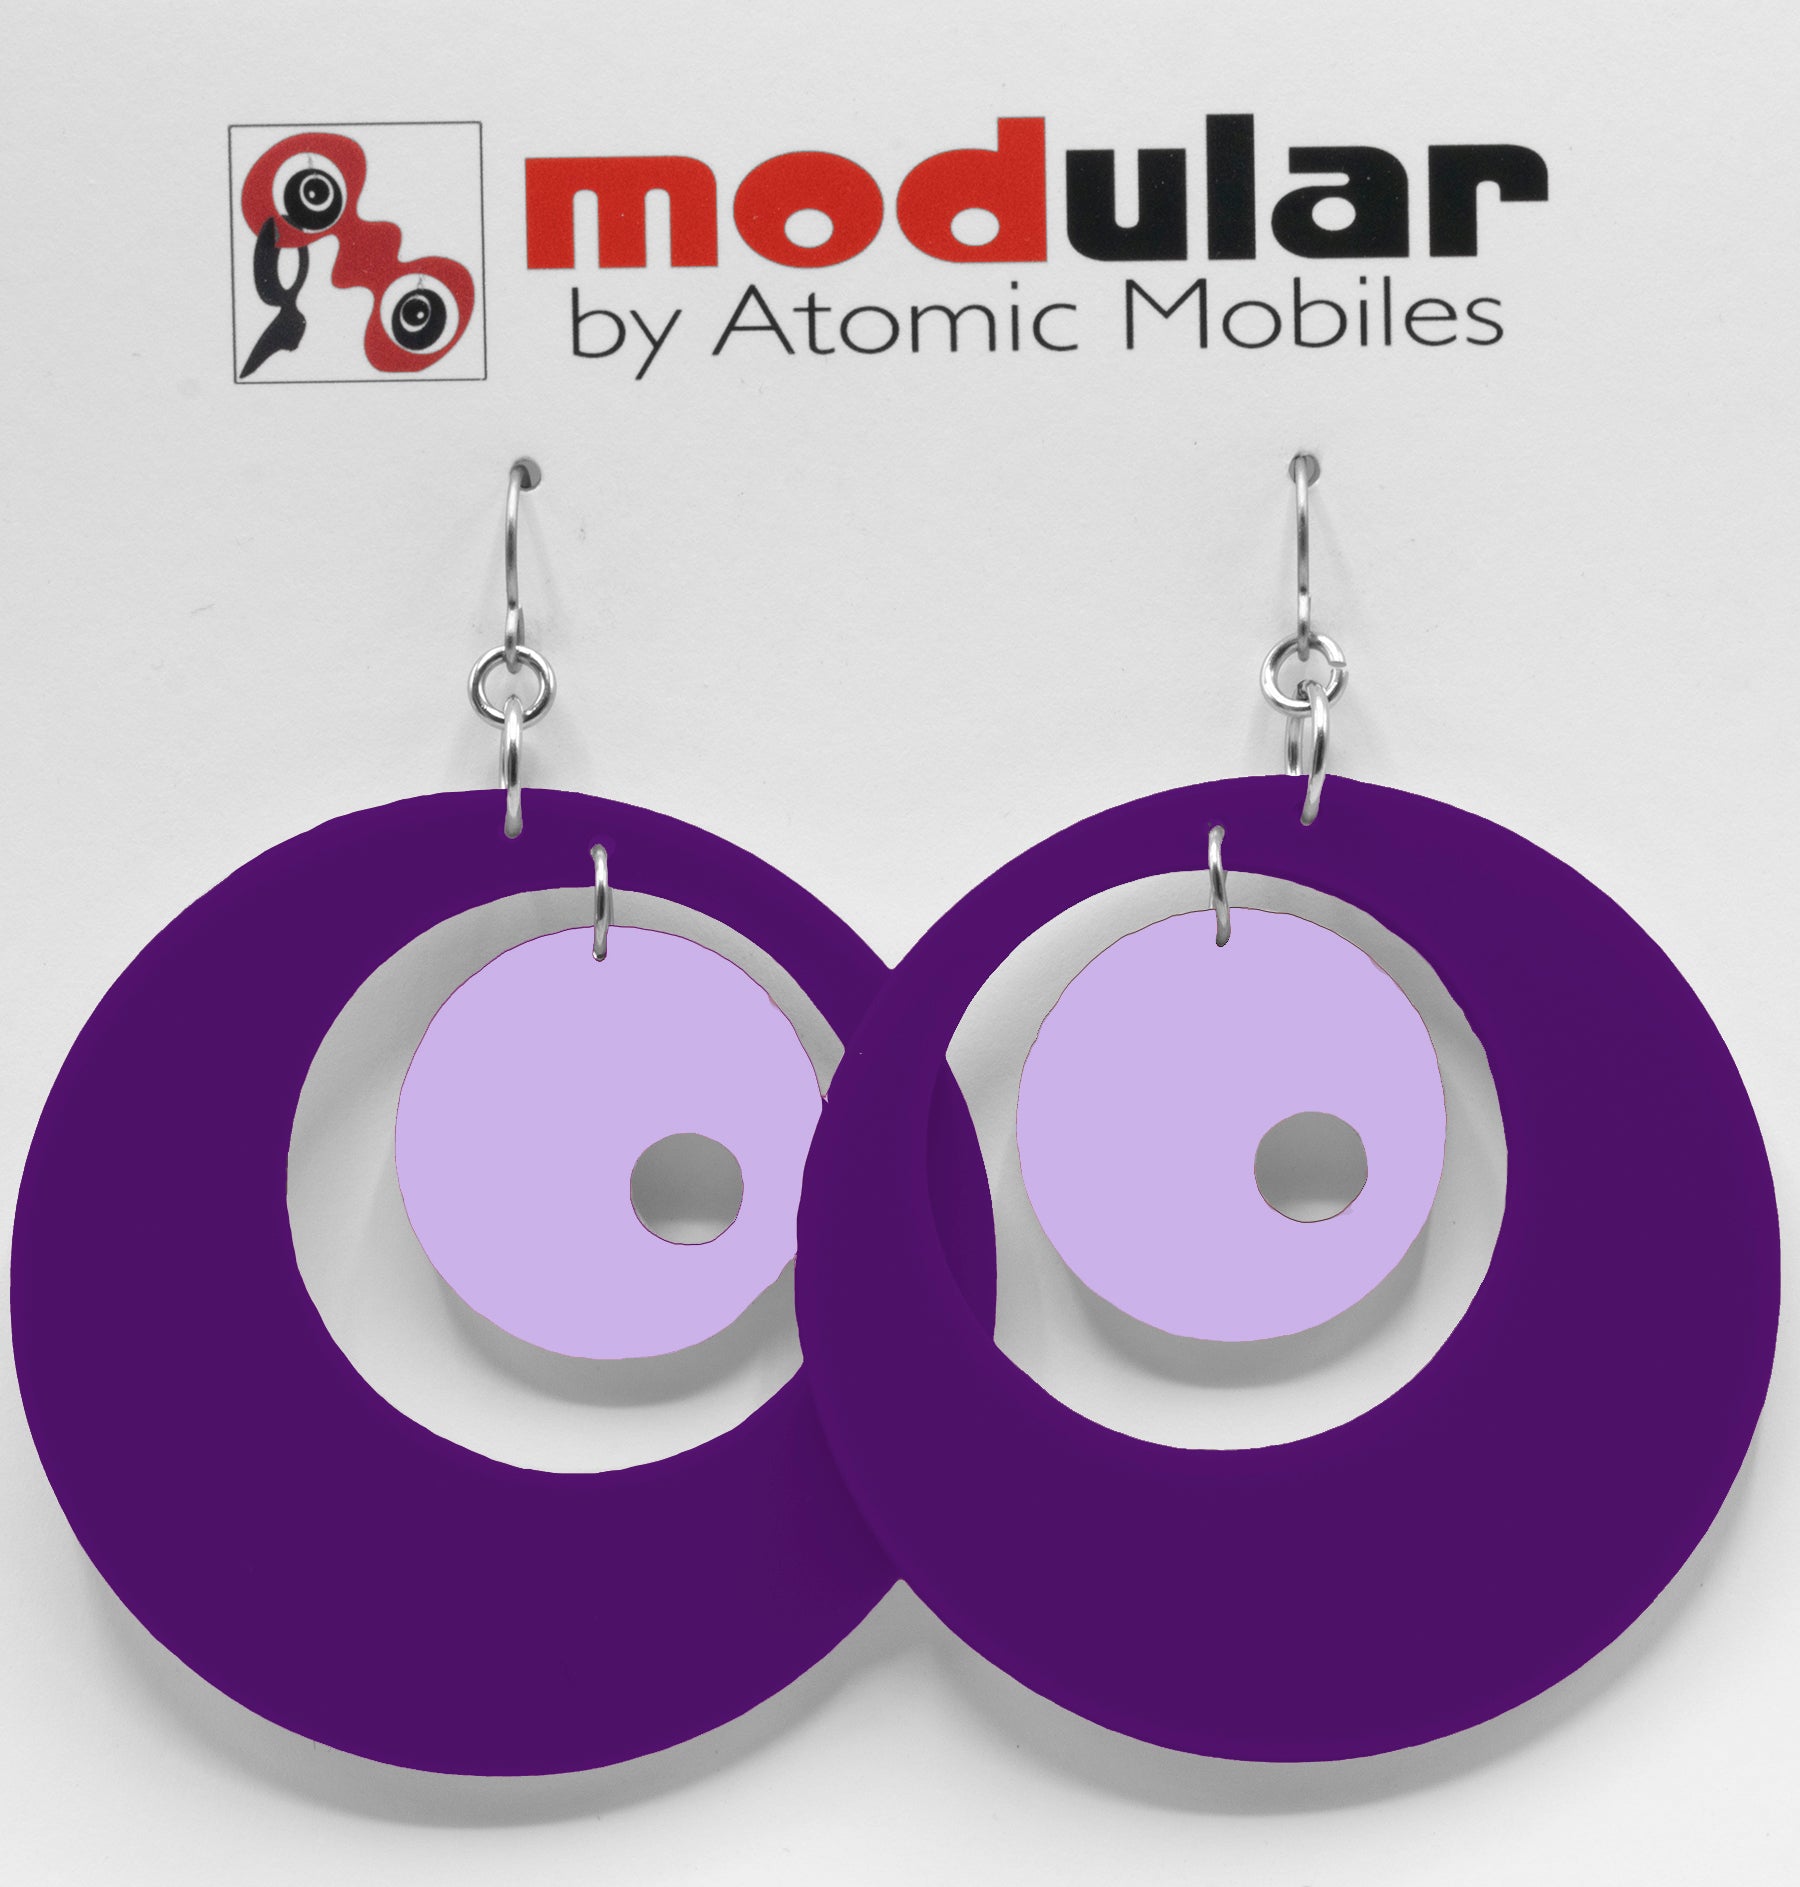 MODular Earrings - Groovy Statement Earrings in Purple by AtomicMobiles.com - retro era inspired mod handmade jewelry